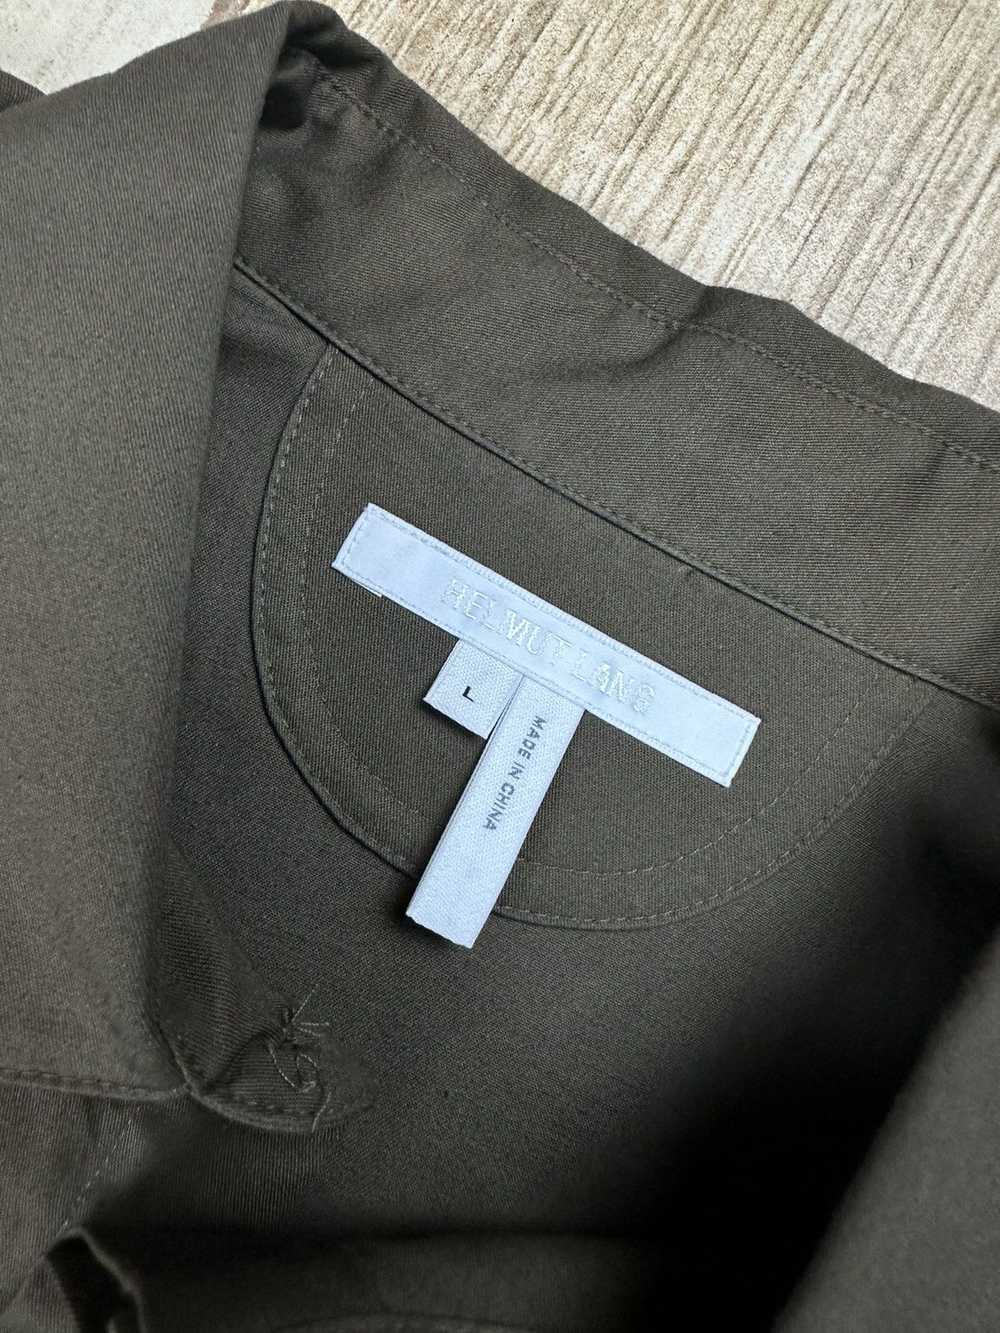 Helmut Lang Helmut Lang button up shirt - image 3